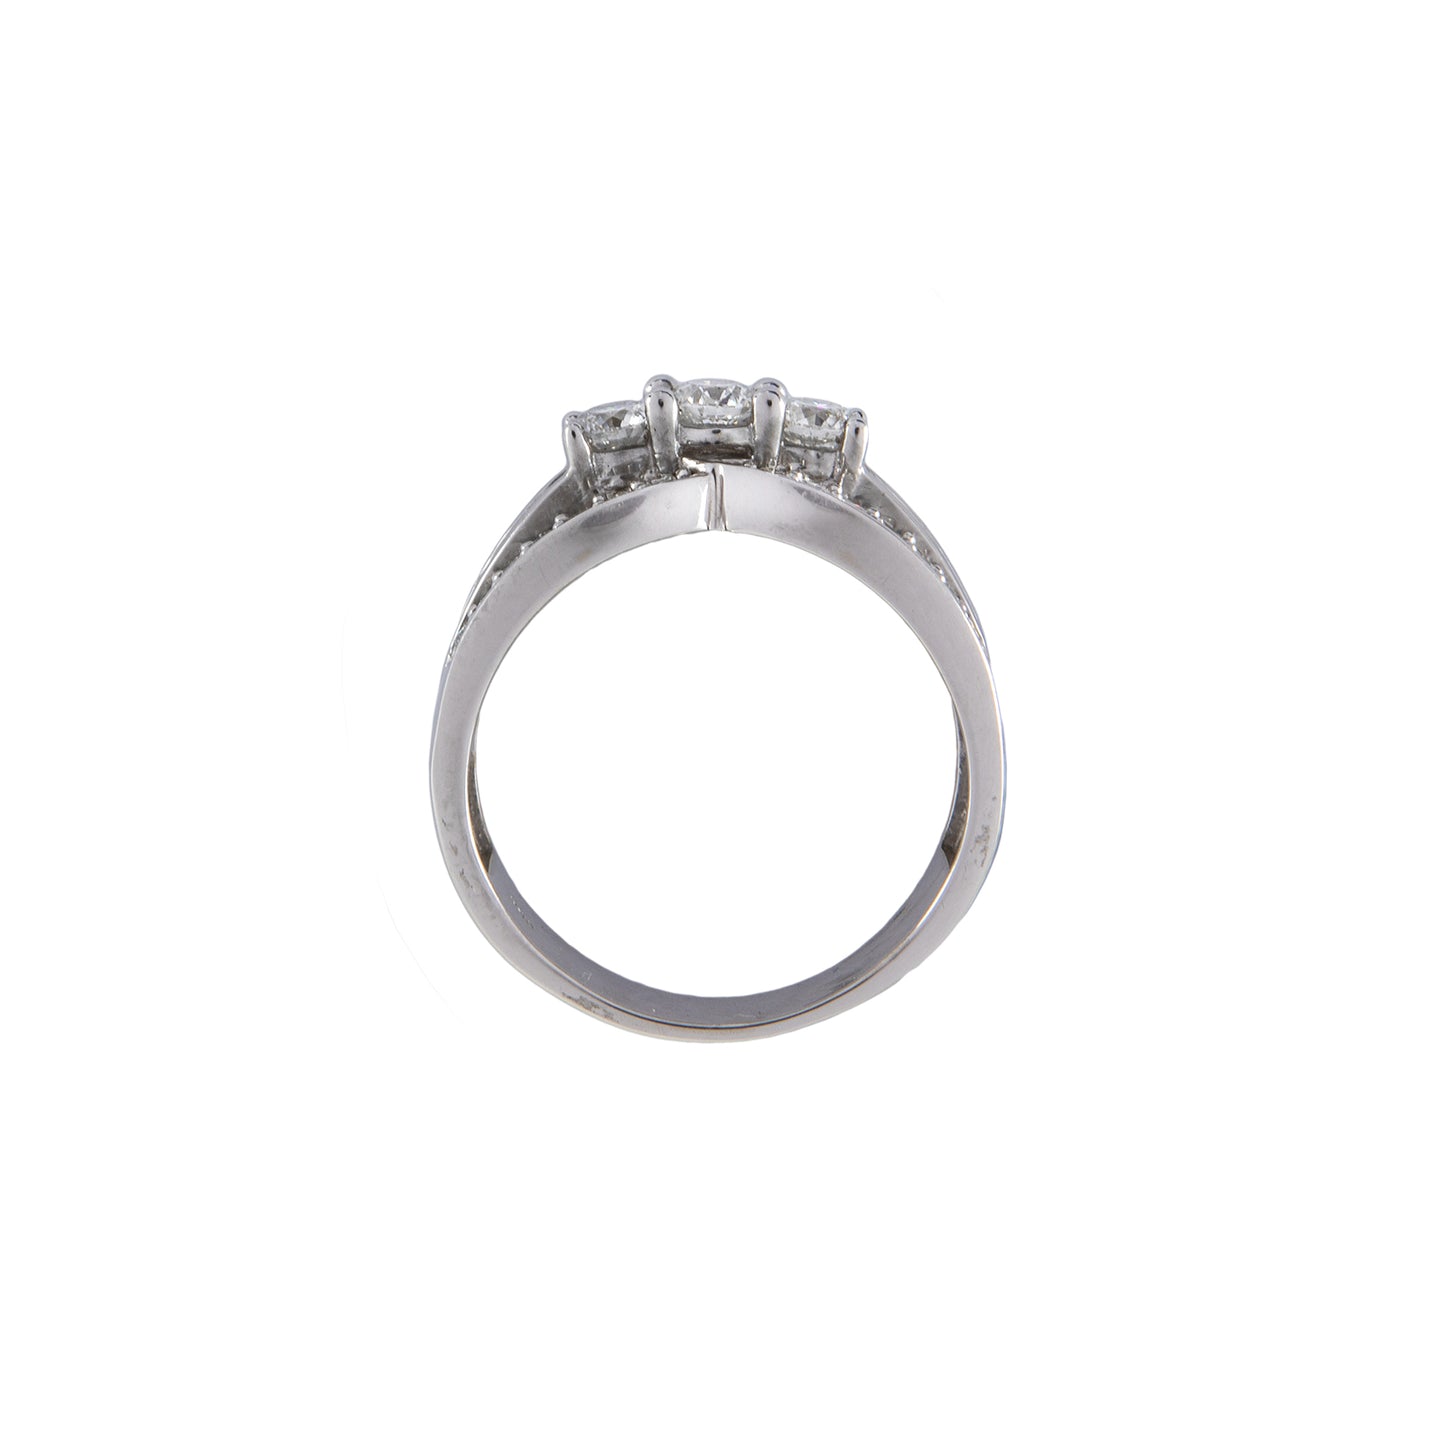 Vintage Diamant Ring Weissgold 585 14K RW55 Damenring Damenschmuck Goldring